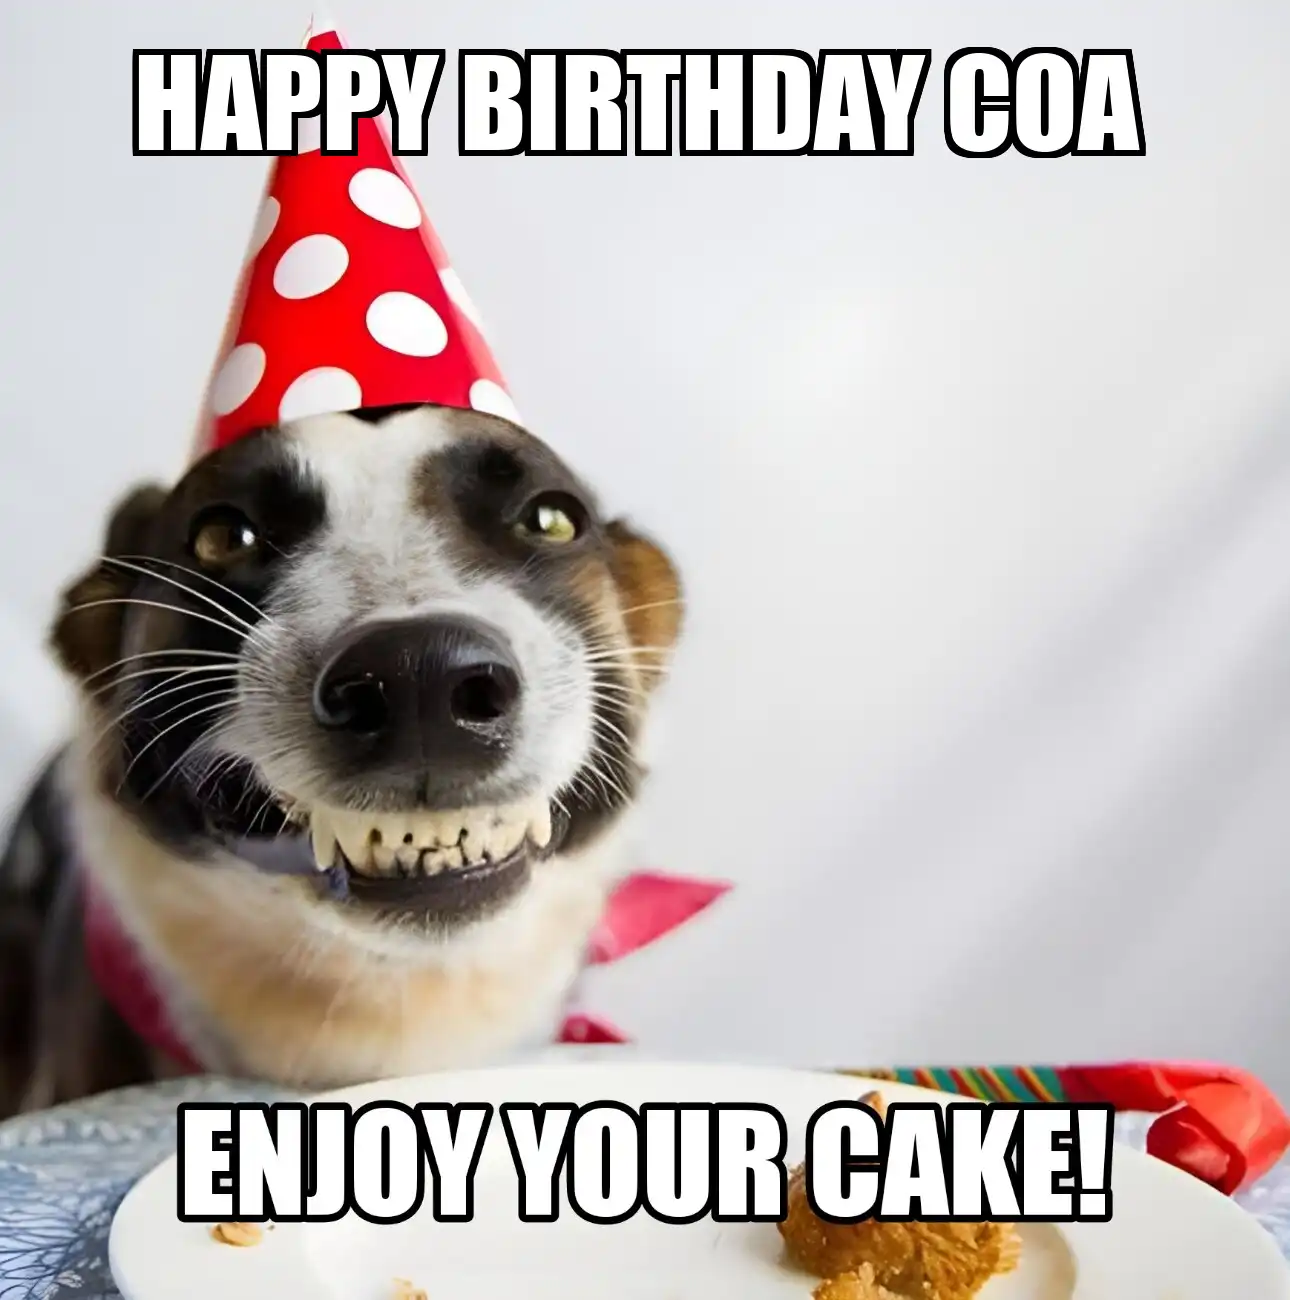 Happy Birthday Coa Enjoy Your Cake Dog Meme